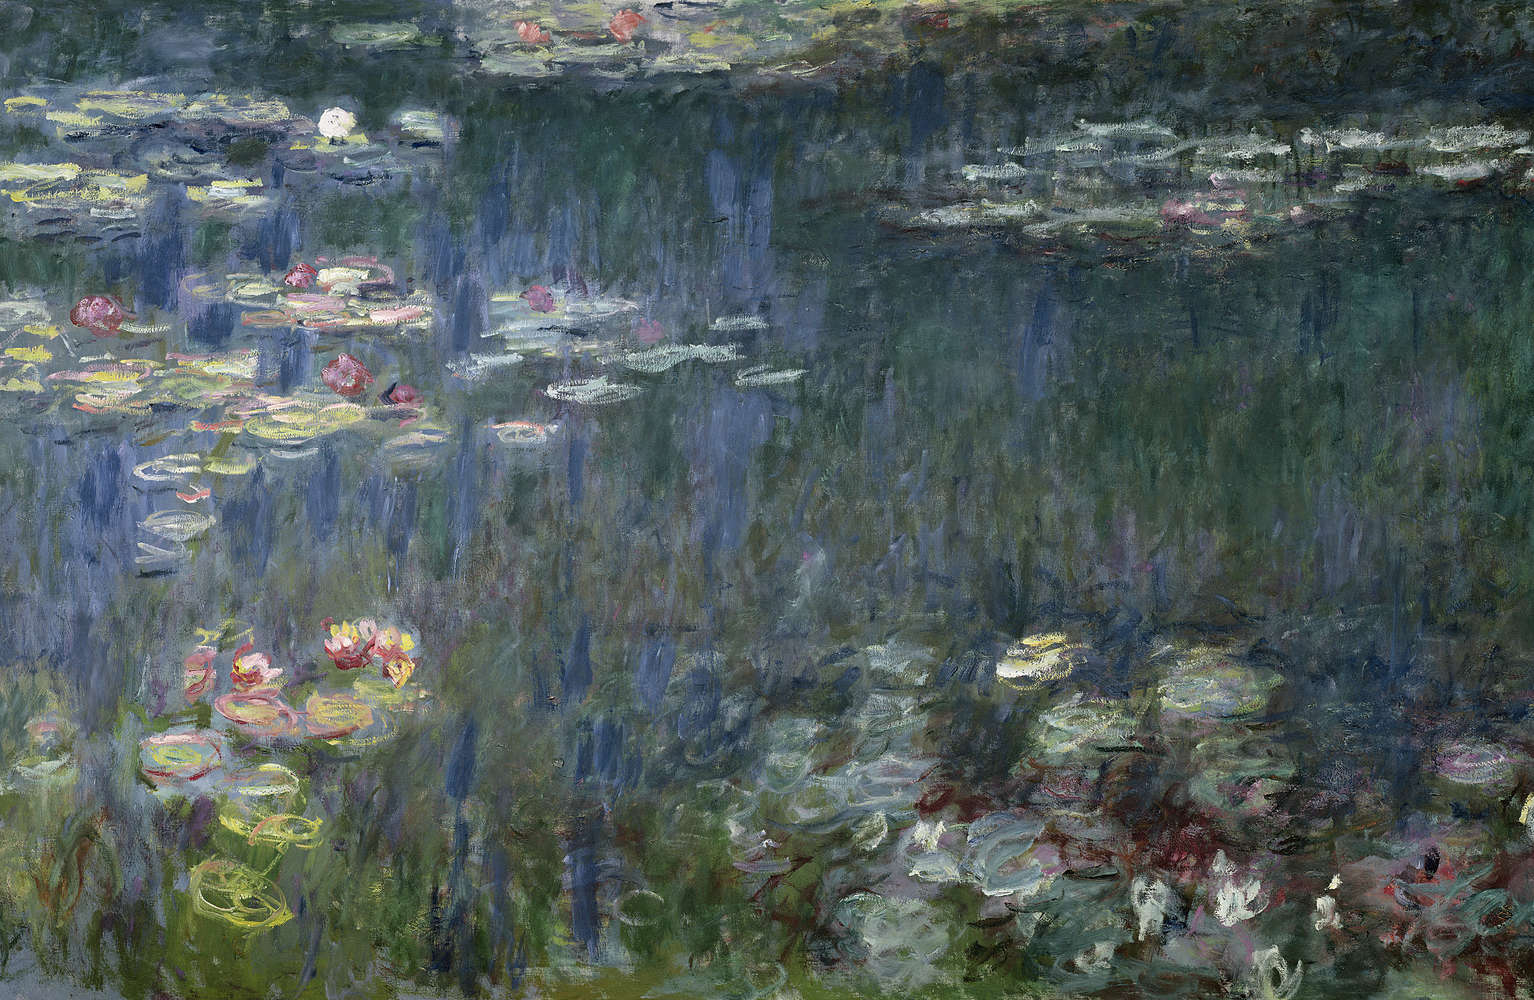             Mural "Nenúfares: reflejos verdes" de Claude Monet
        